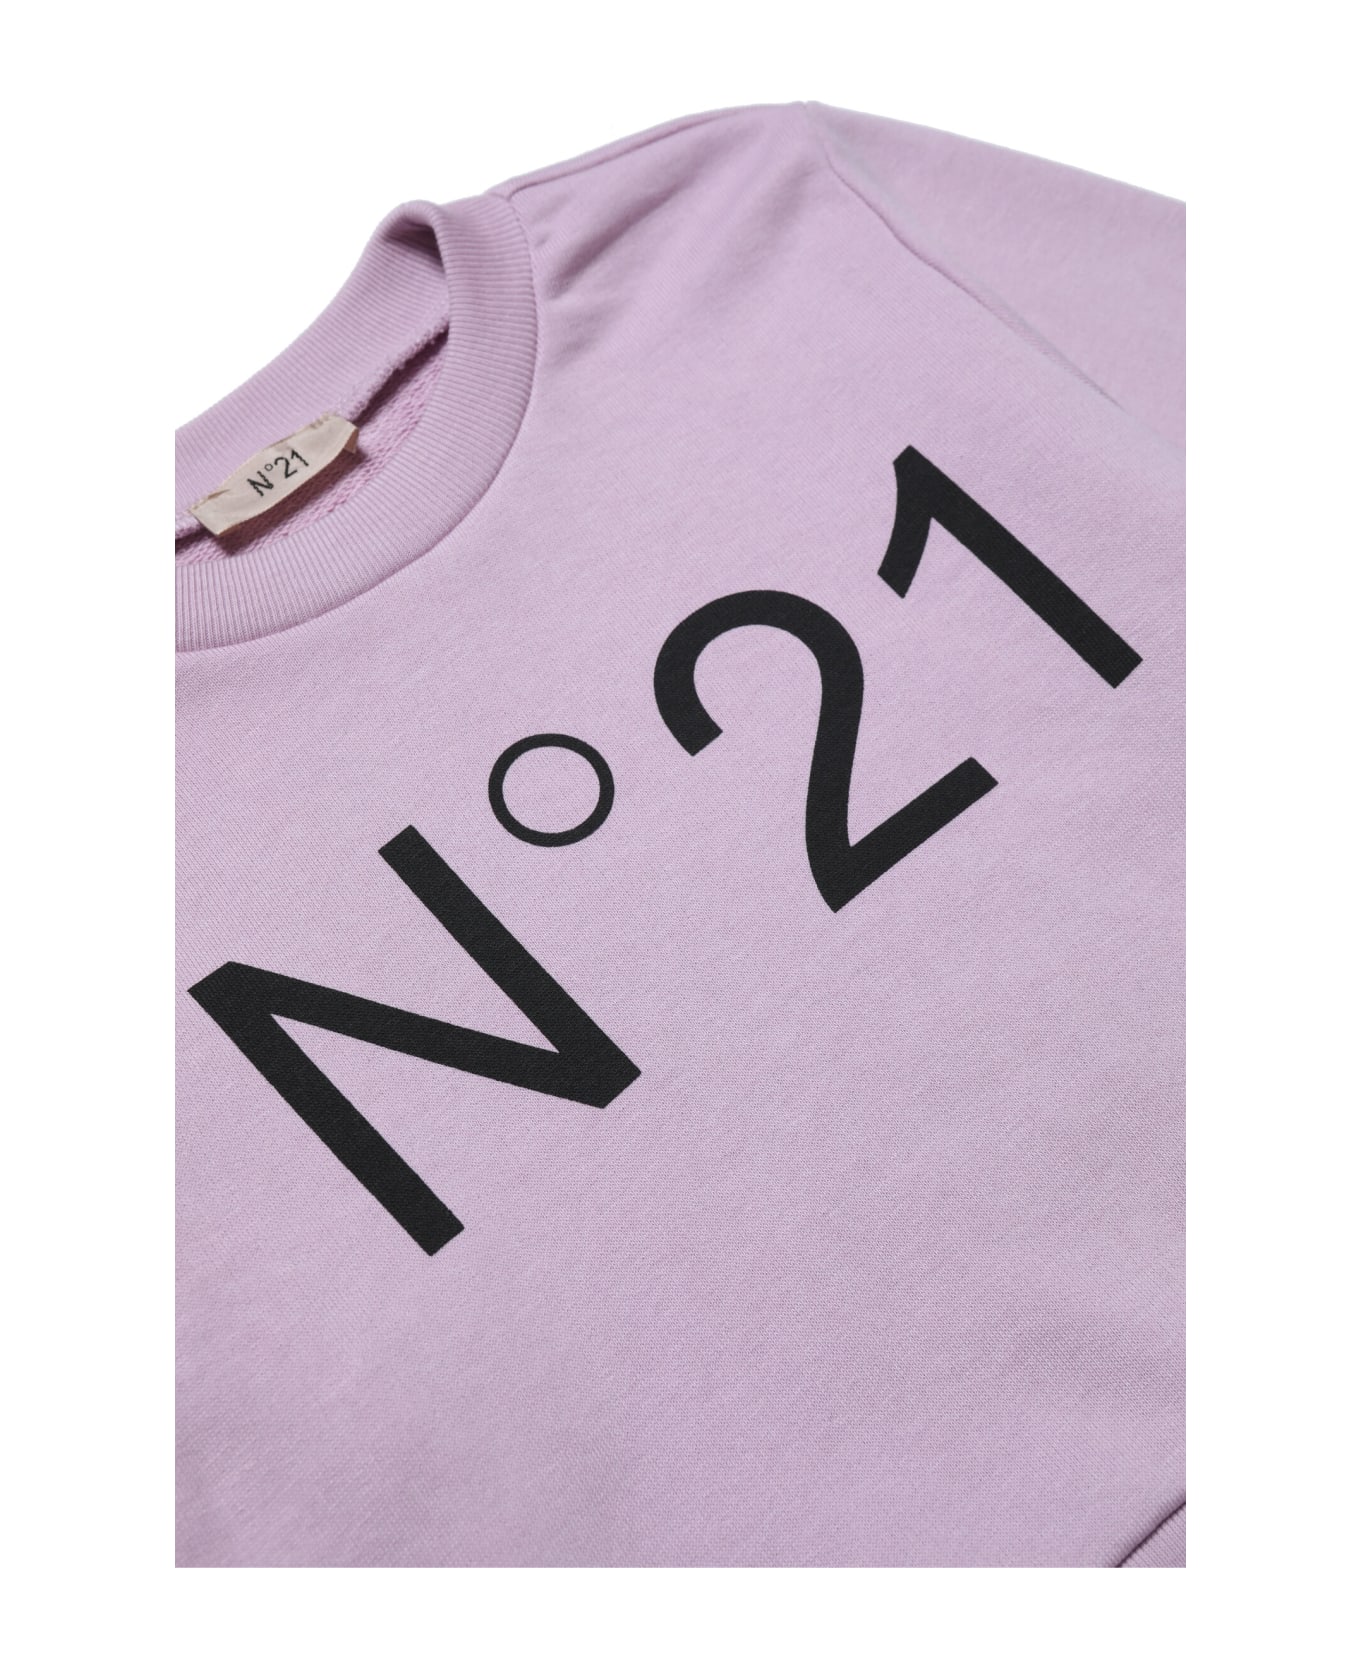 N.21 N21s160f Sweat-shirt N°21 Pink Crew-neck Cotton Sweatshirt With Logo - Bally logo print knitted sweatshirt